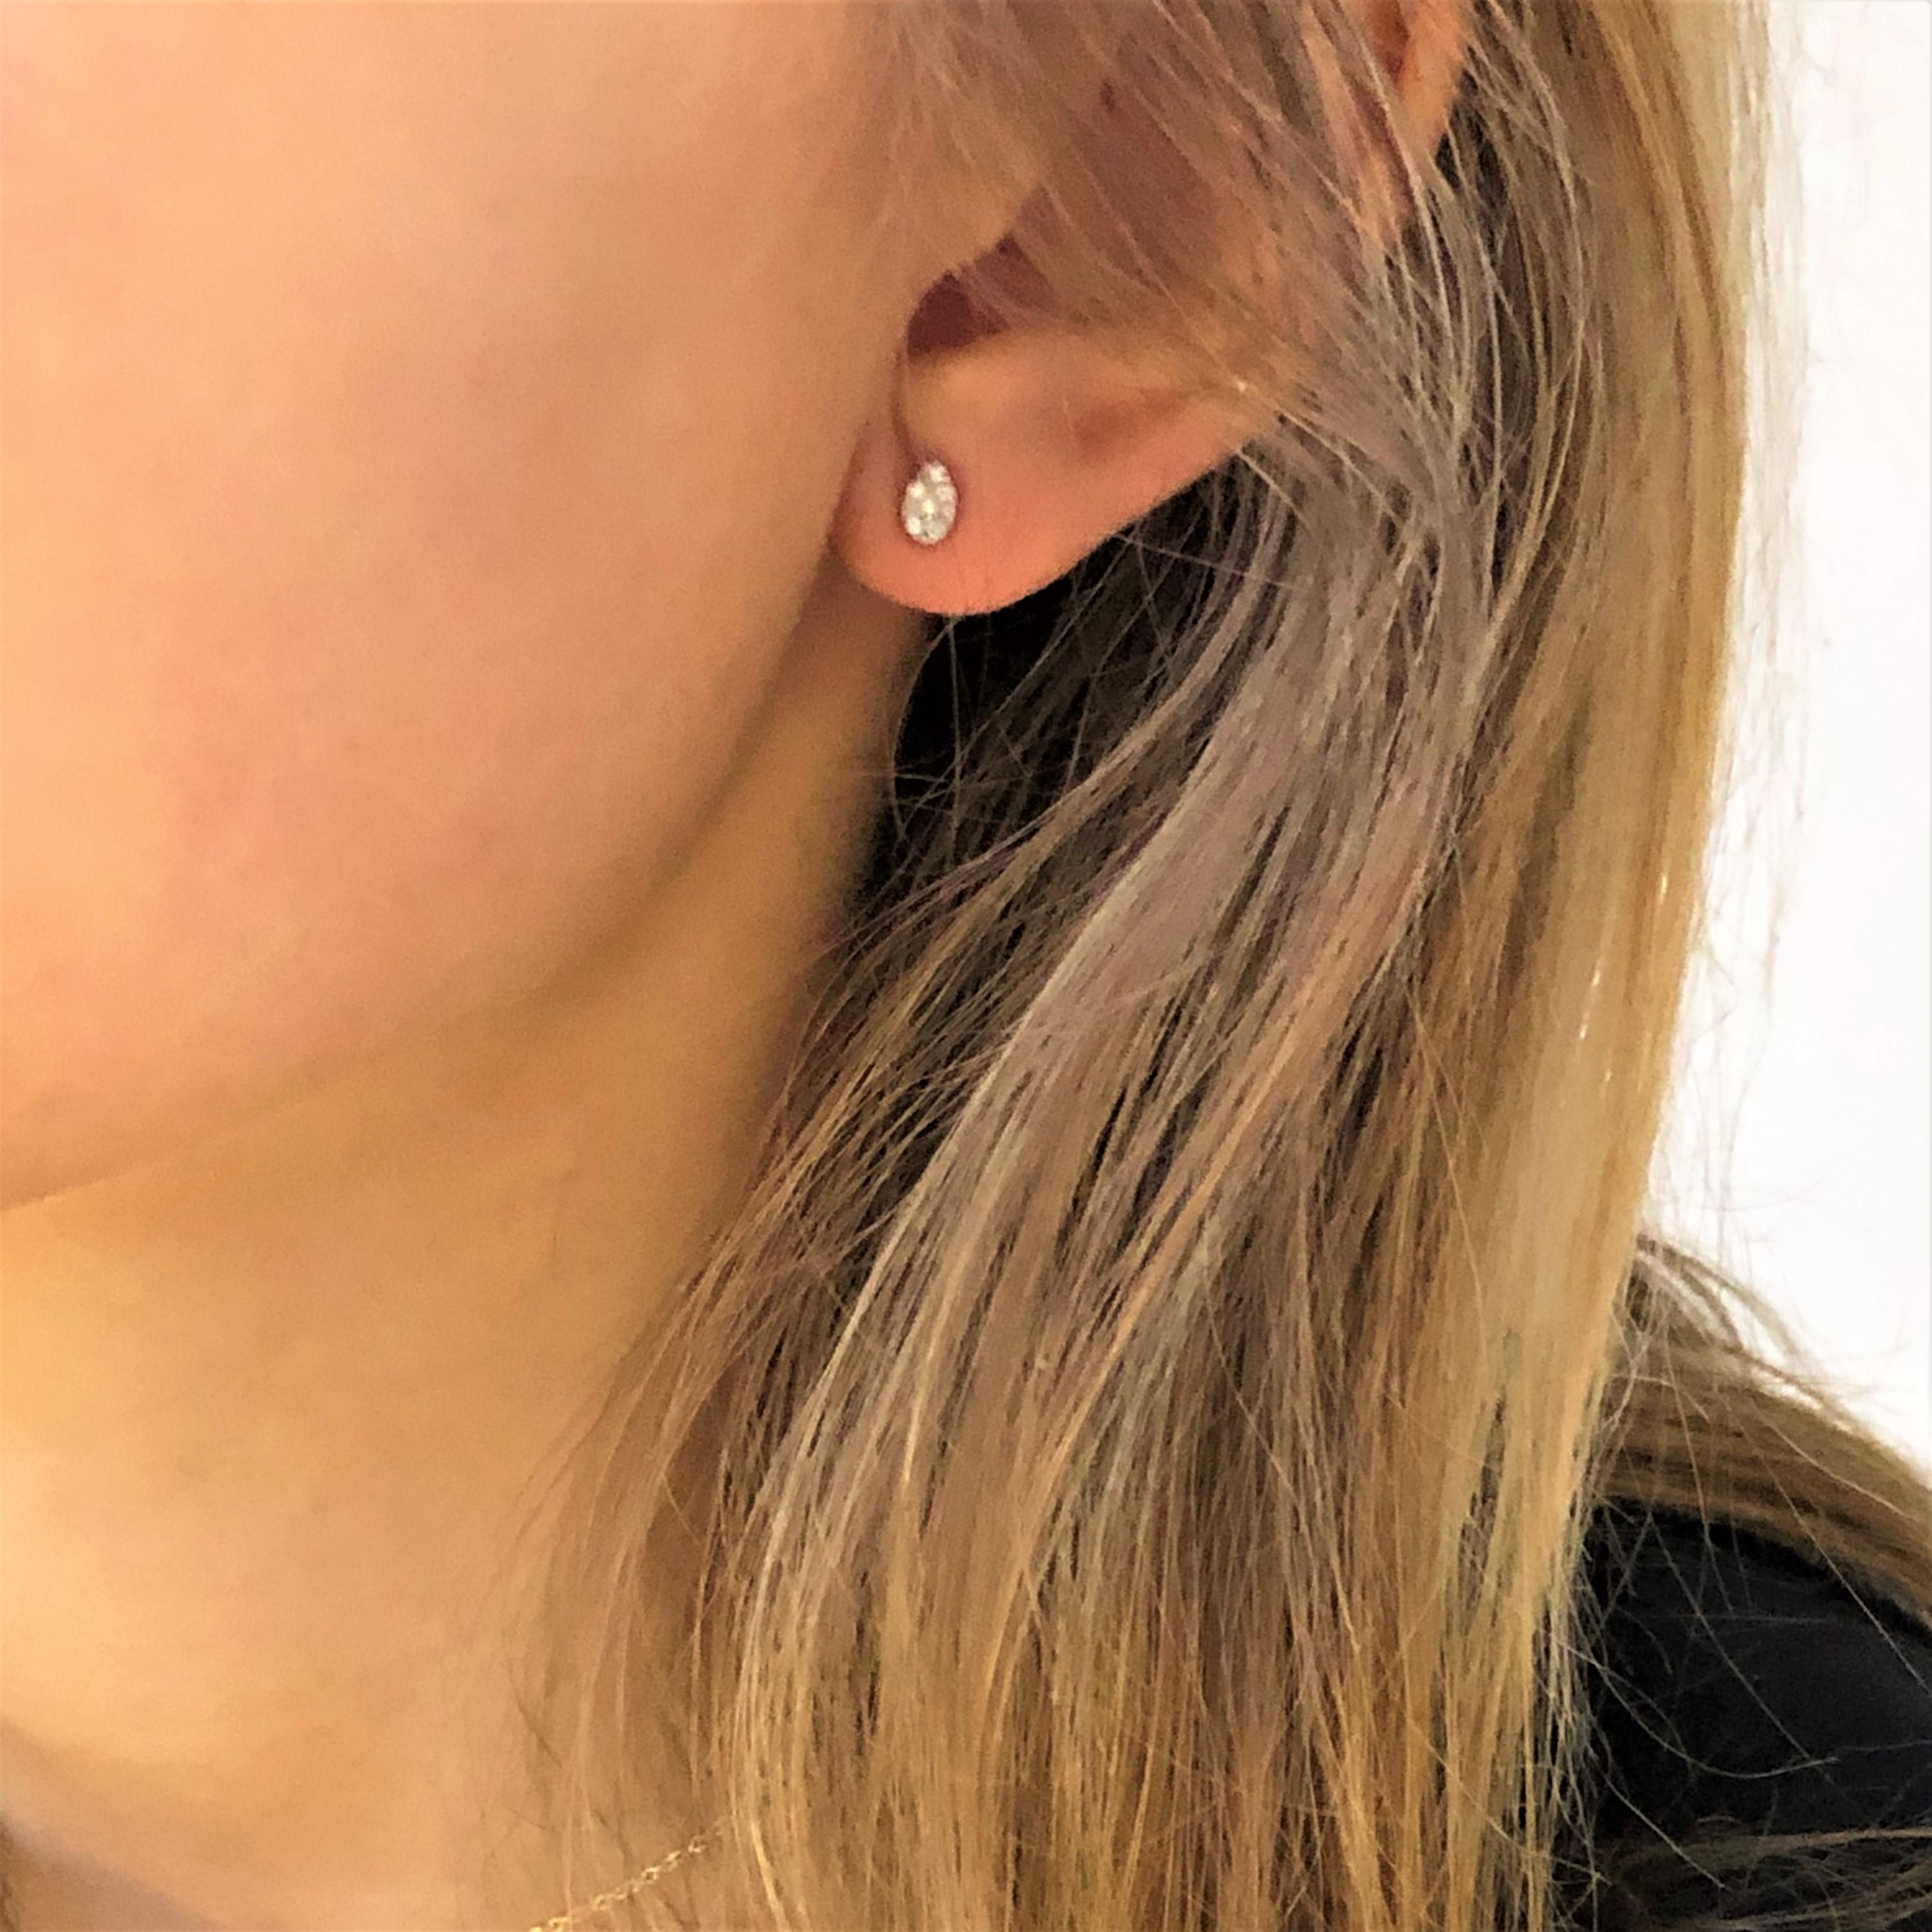 14 karat white gold tiny diamond stud earrings
Pear shape studs measuring 0.25 inch
Round diamond weighing 0.14 carat 
Diamond quality H SI
New Earrings
Handmade in USA
